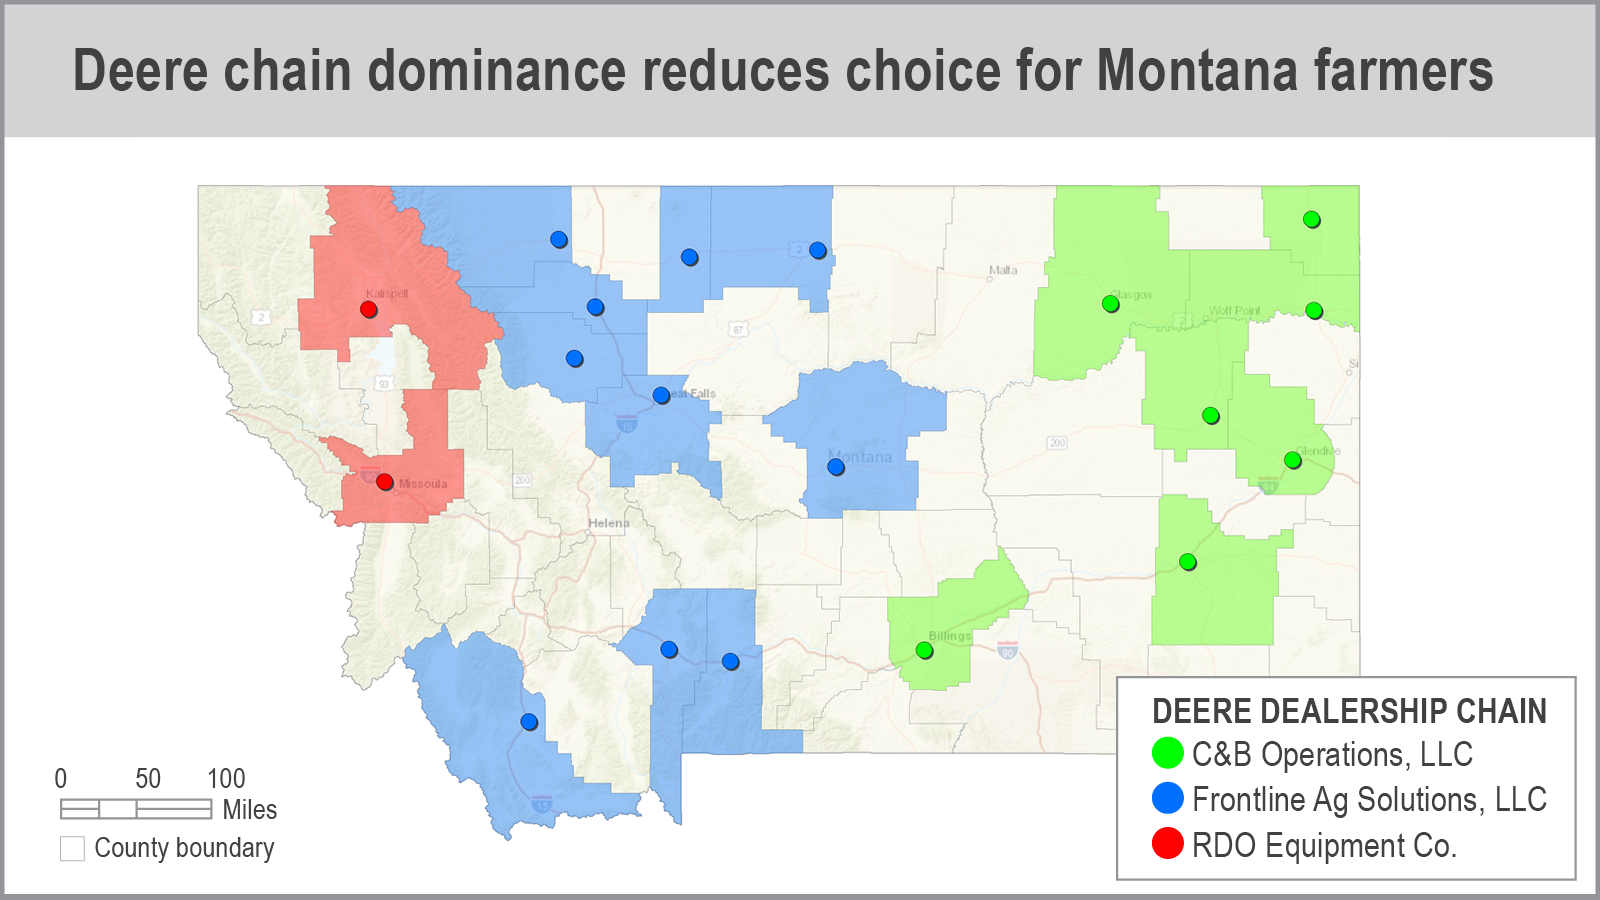 Deere chain dominance reduces choice for Montana farmers